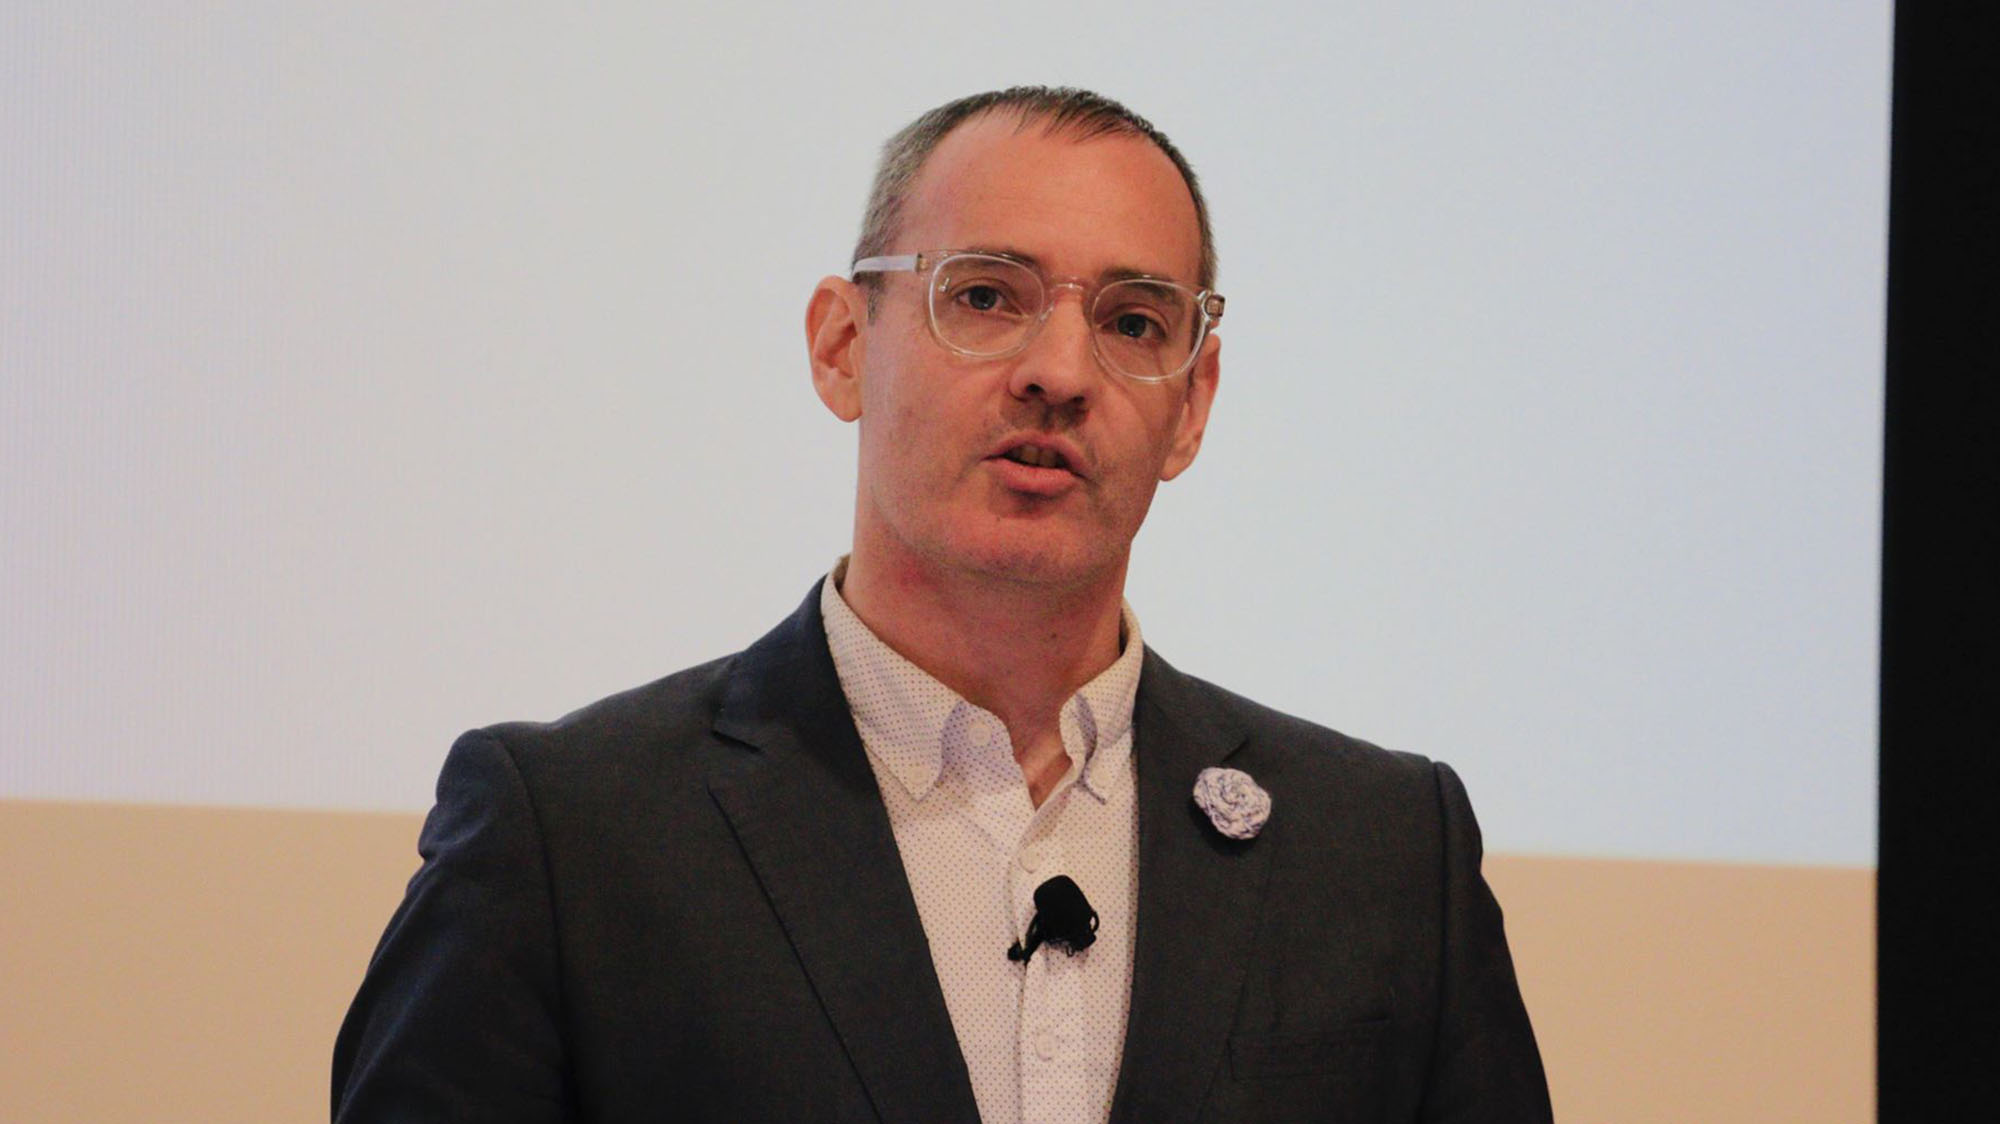 Craig Silverman, BuzzFeed News, speaking at the 2019 Joseph Howe Symposium 